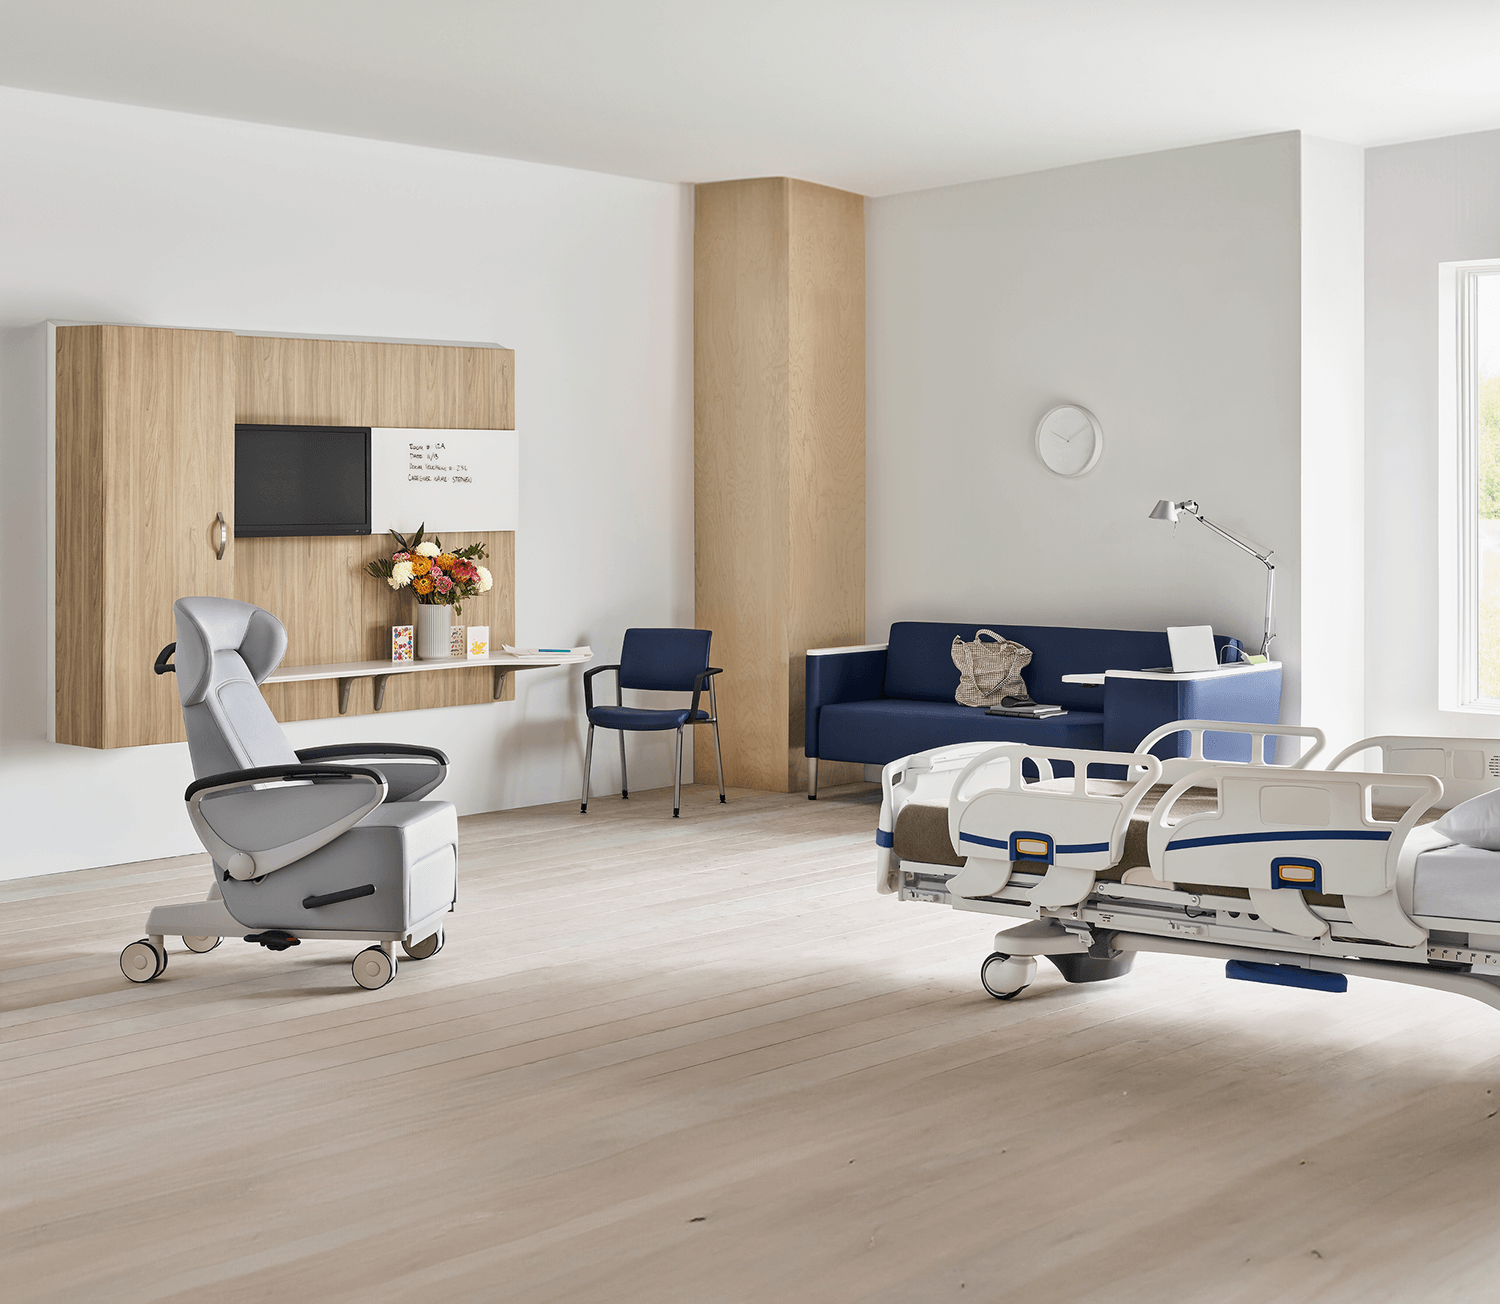 medical furniture in a hospiral room